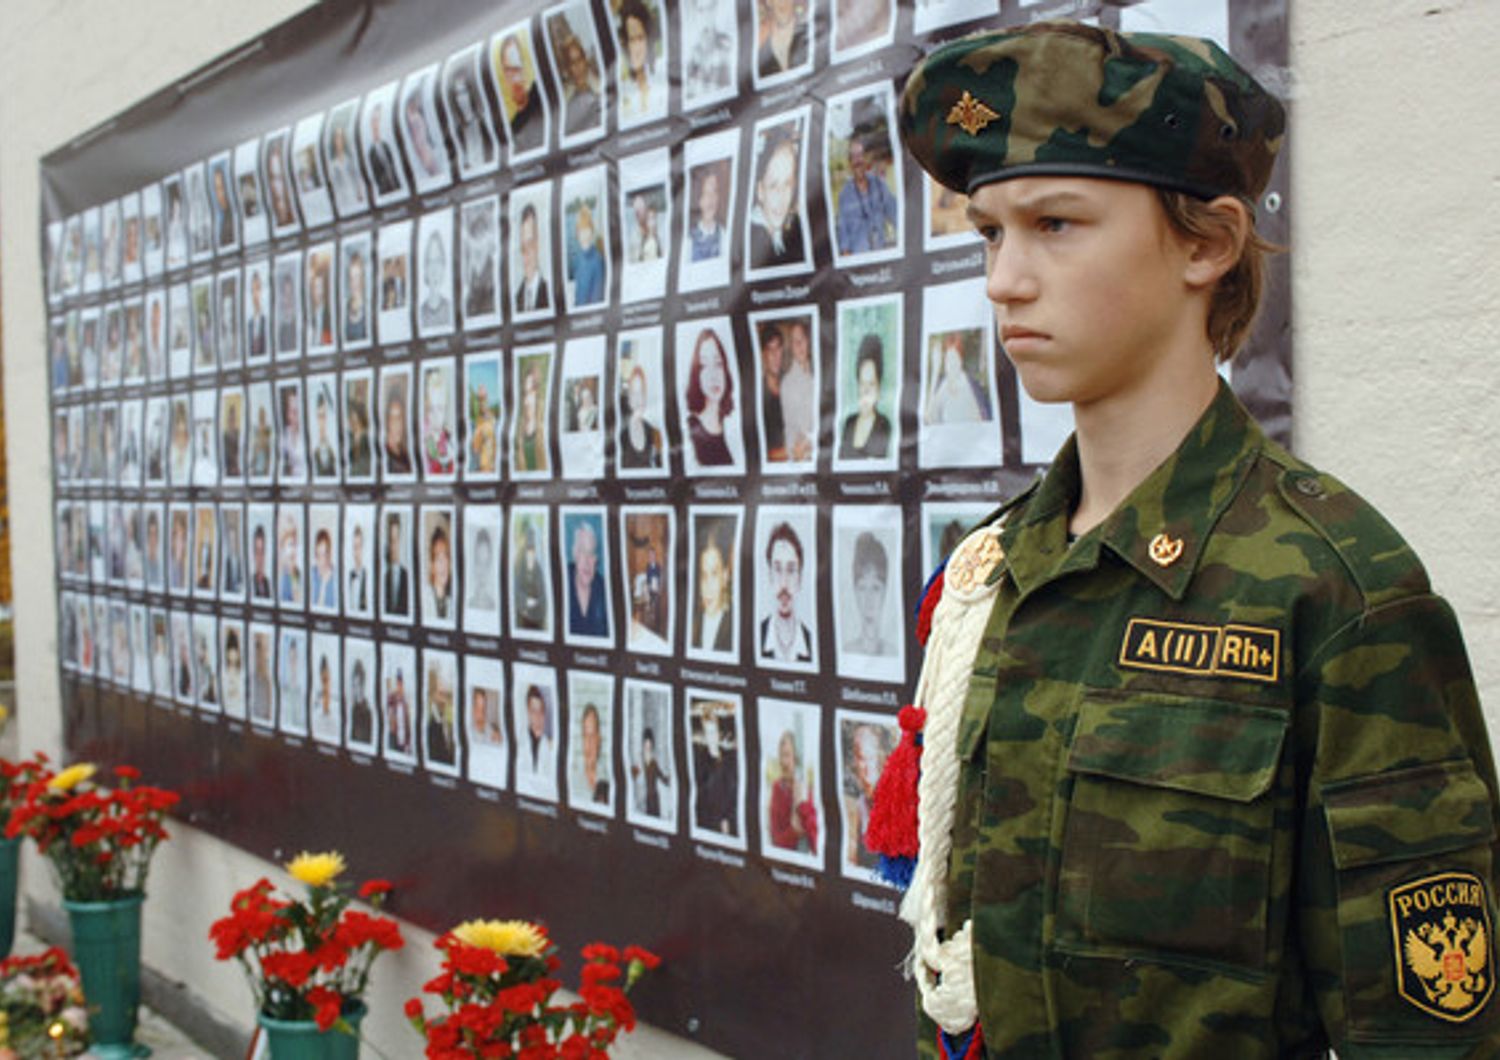 Russia vittime al teatro Dubrovka di Mosca (Afp)&nbsp;